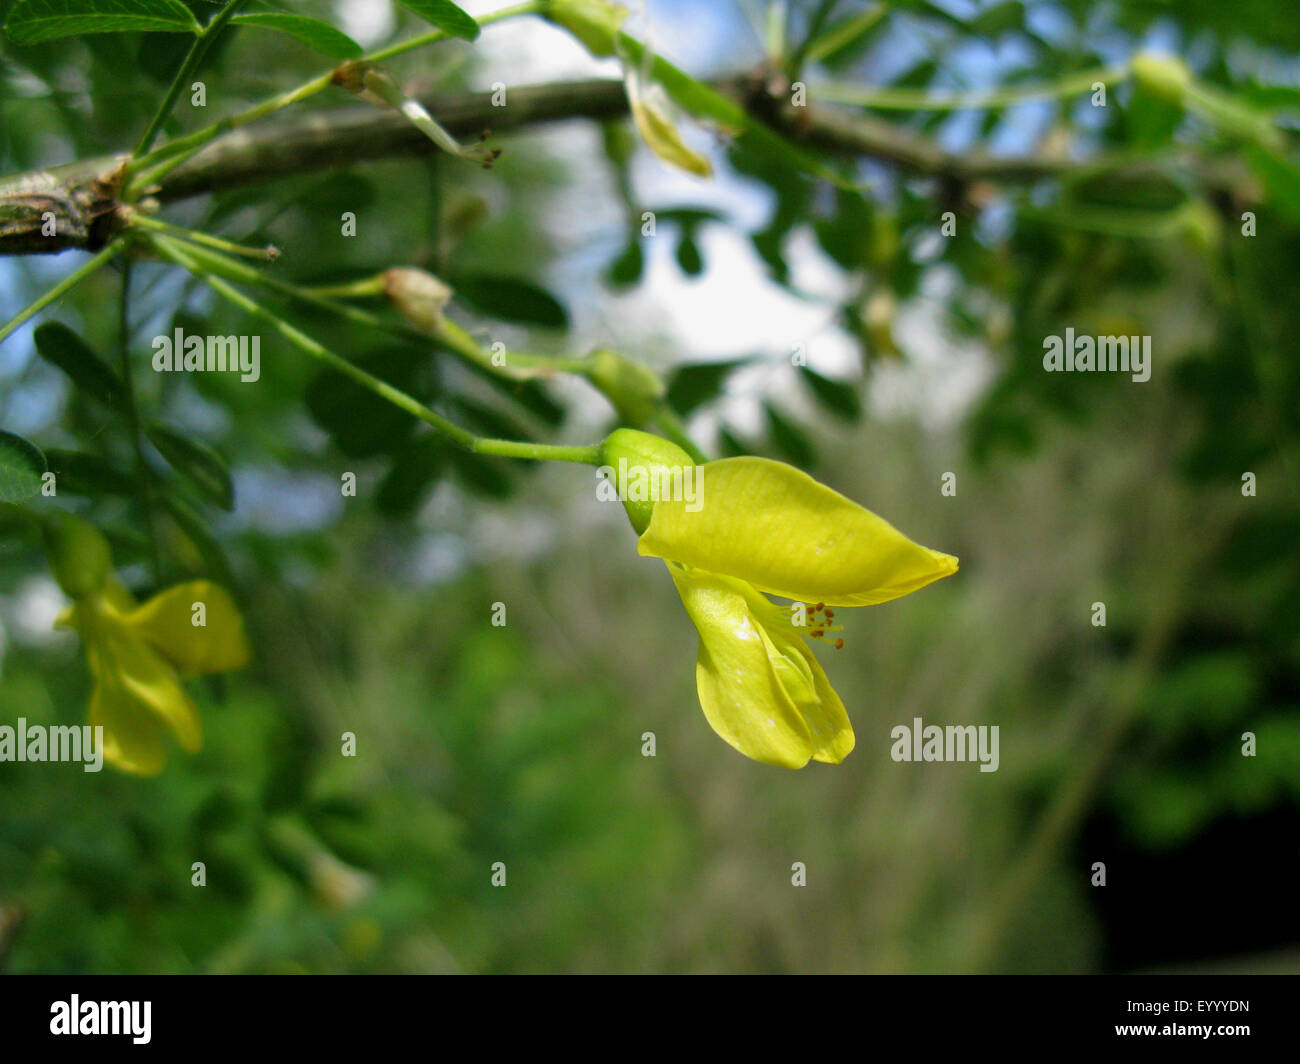 pea shrub, pea tree, Siberian pea shrub (Caragana arborescens), blooming branch Stock Photo